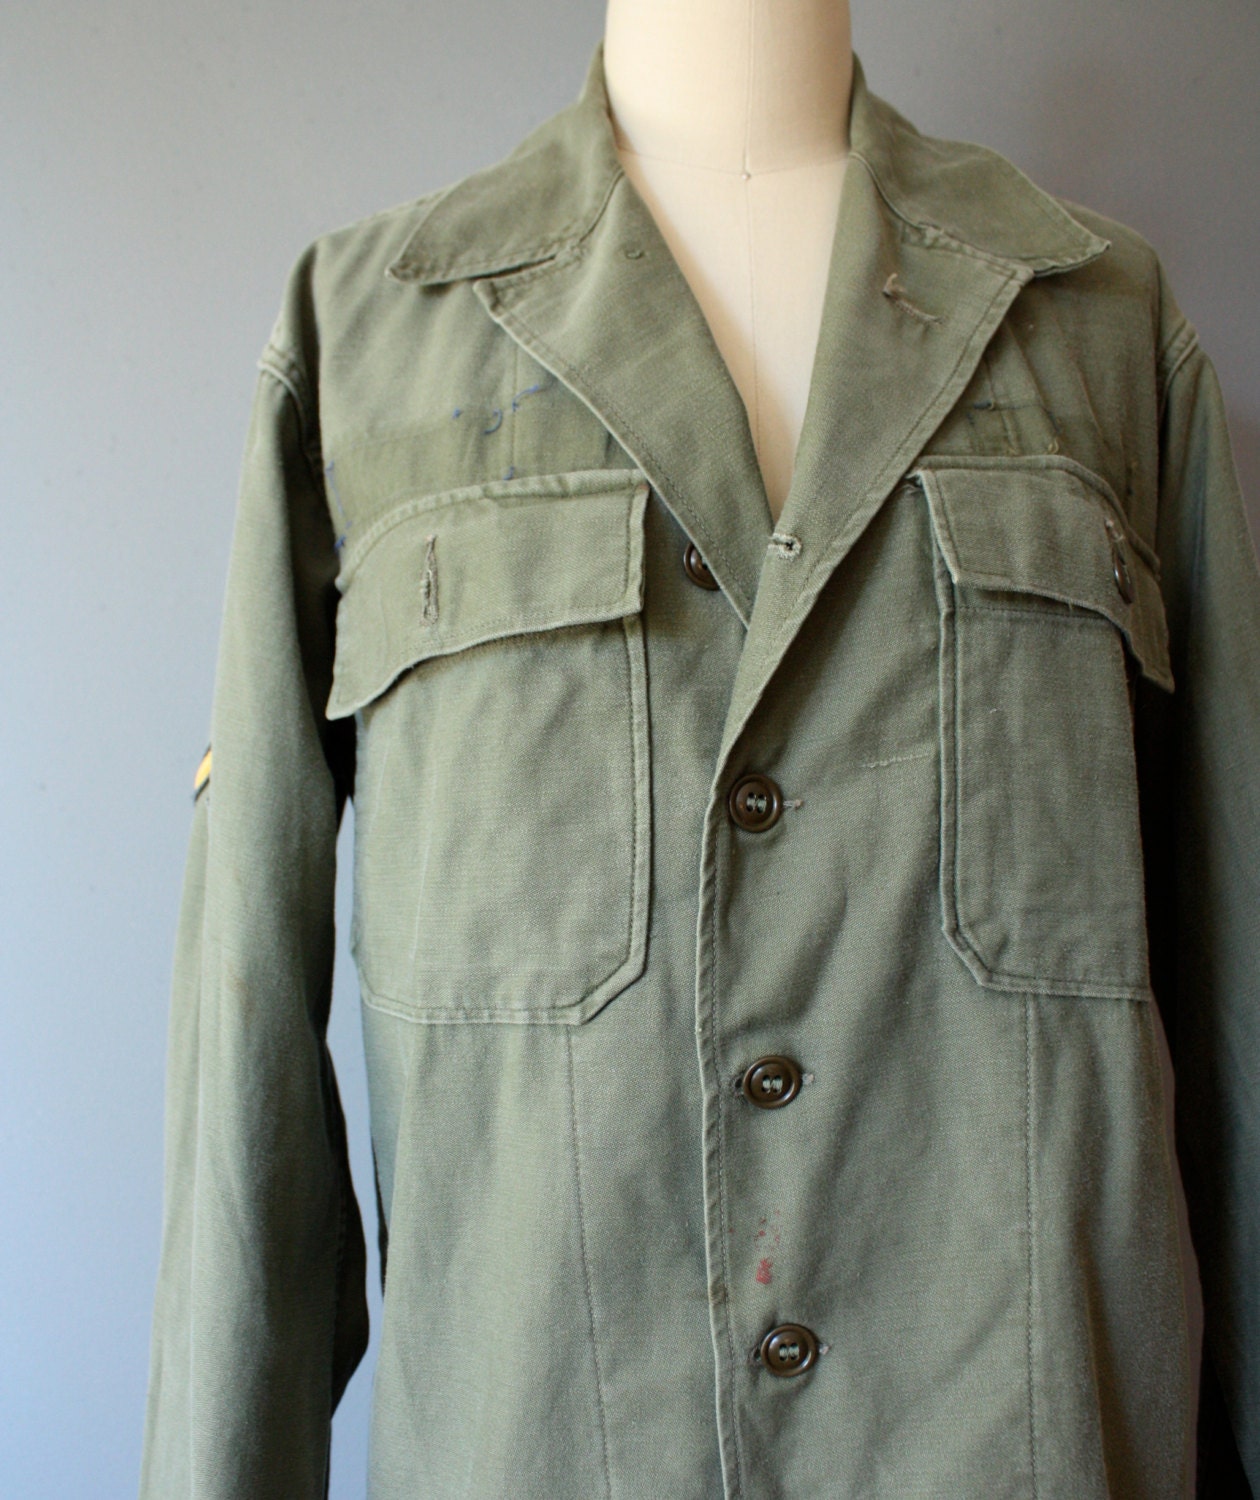 vintage army jacket / olive green field jacket / M-L